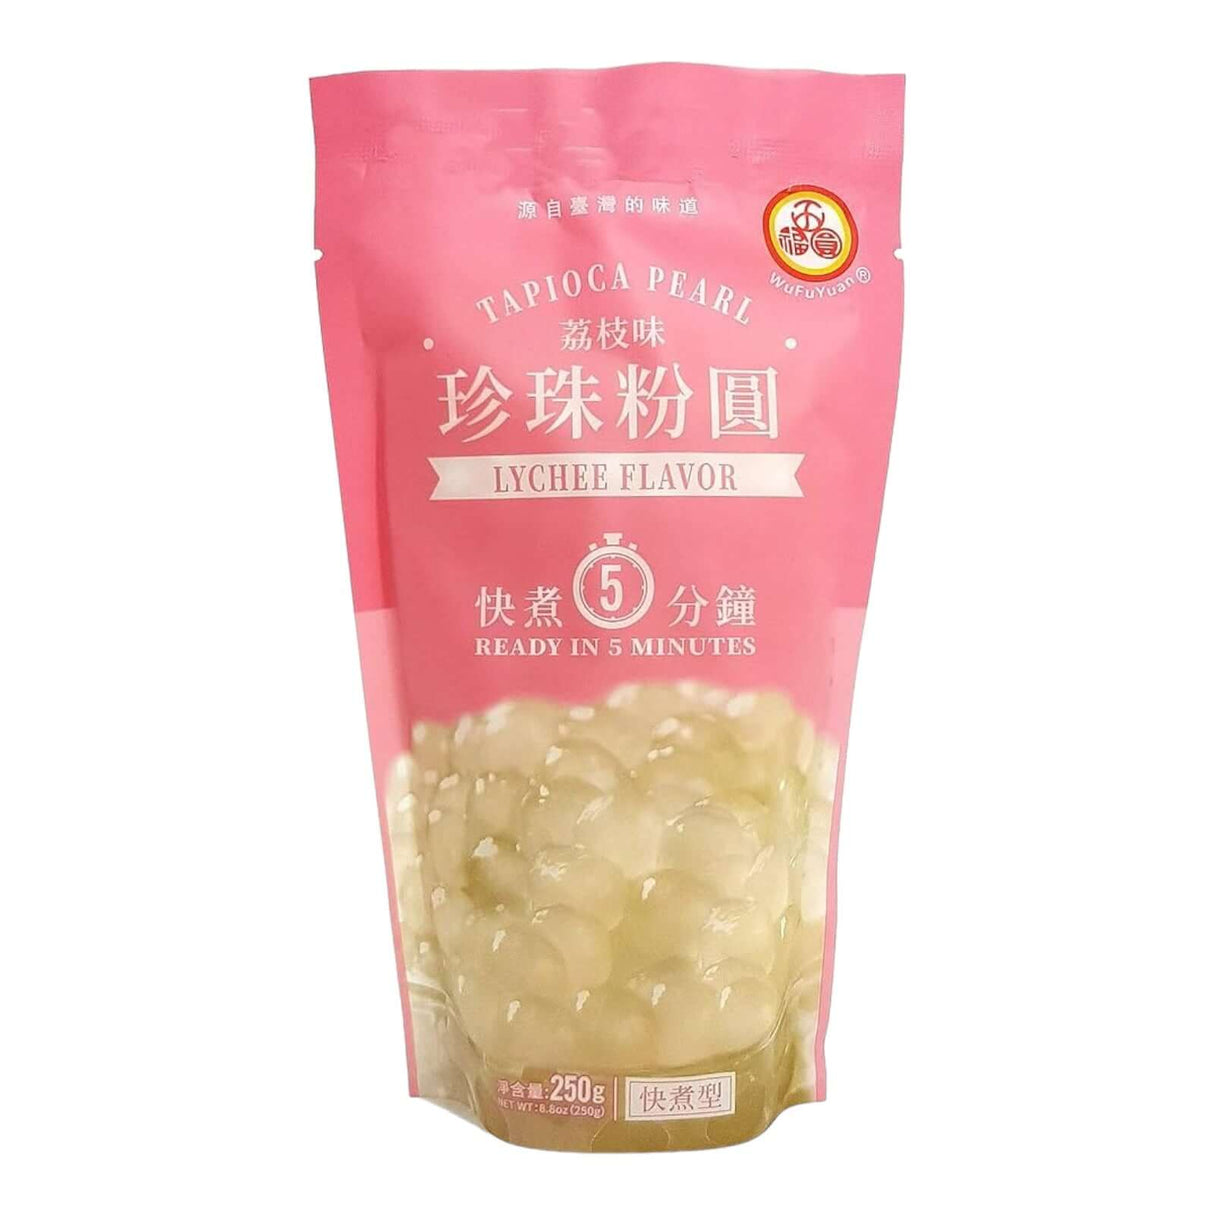 WuFuYuan Tapioca Pearl Lychee Flavor